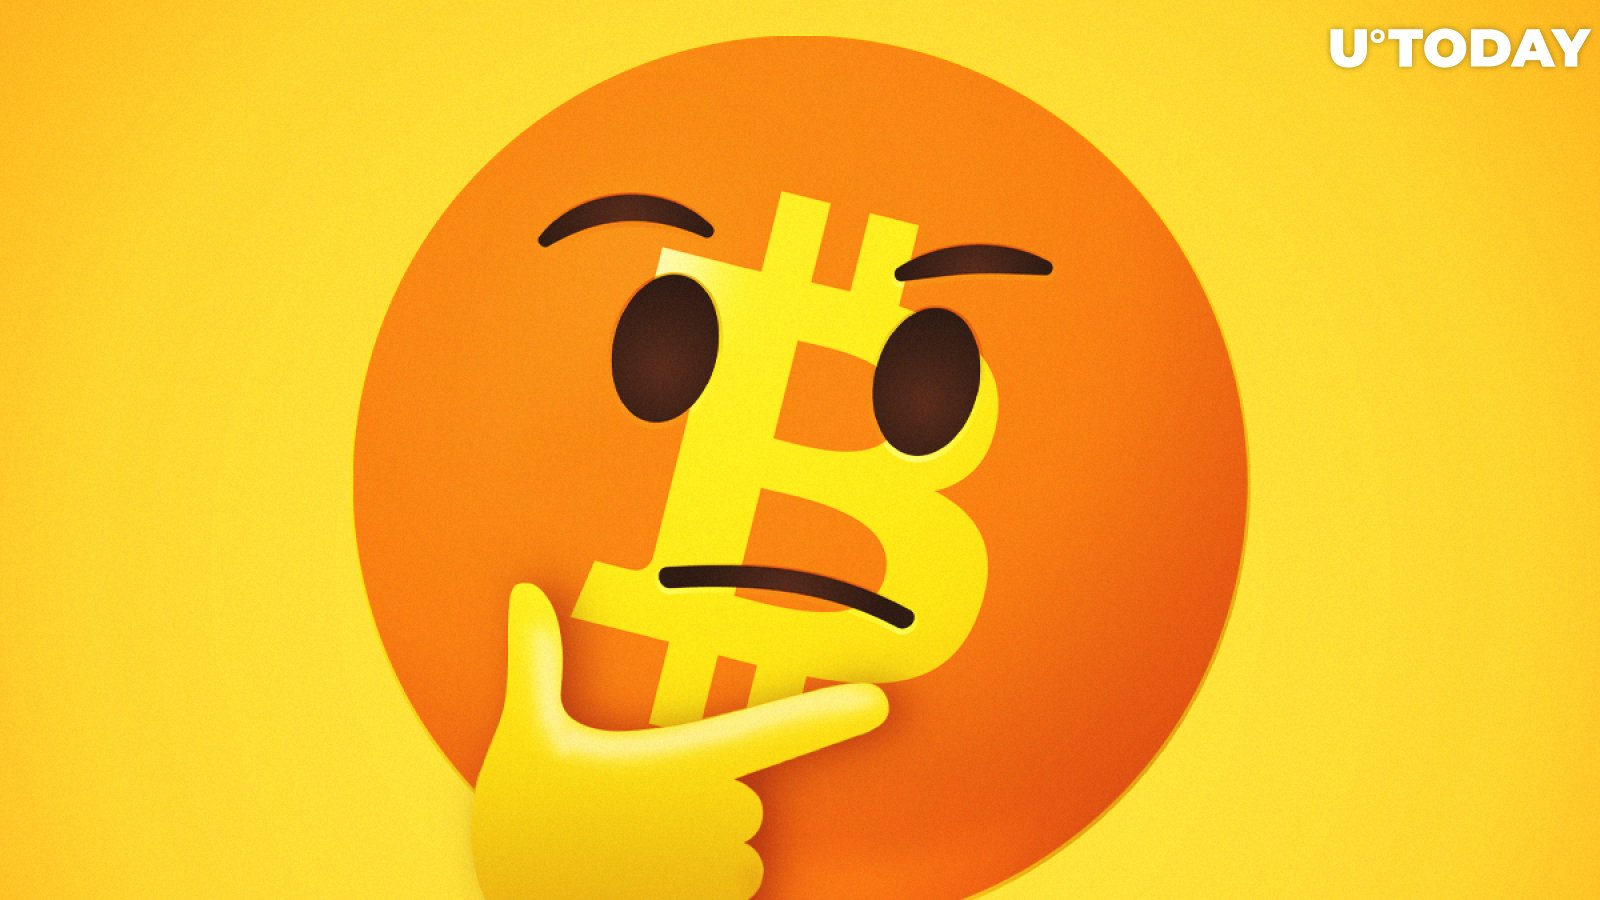 Bitcoin Community Asks for Bitcoin Emoji, Petition Created by “Satoshi Nakamoto”